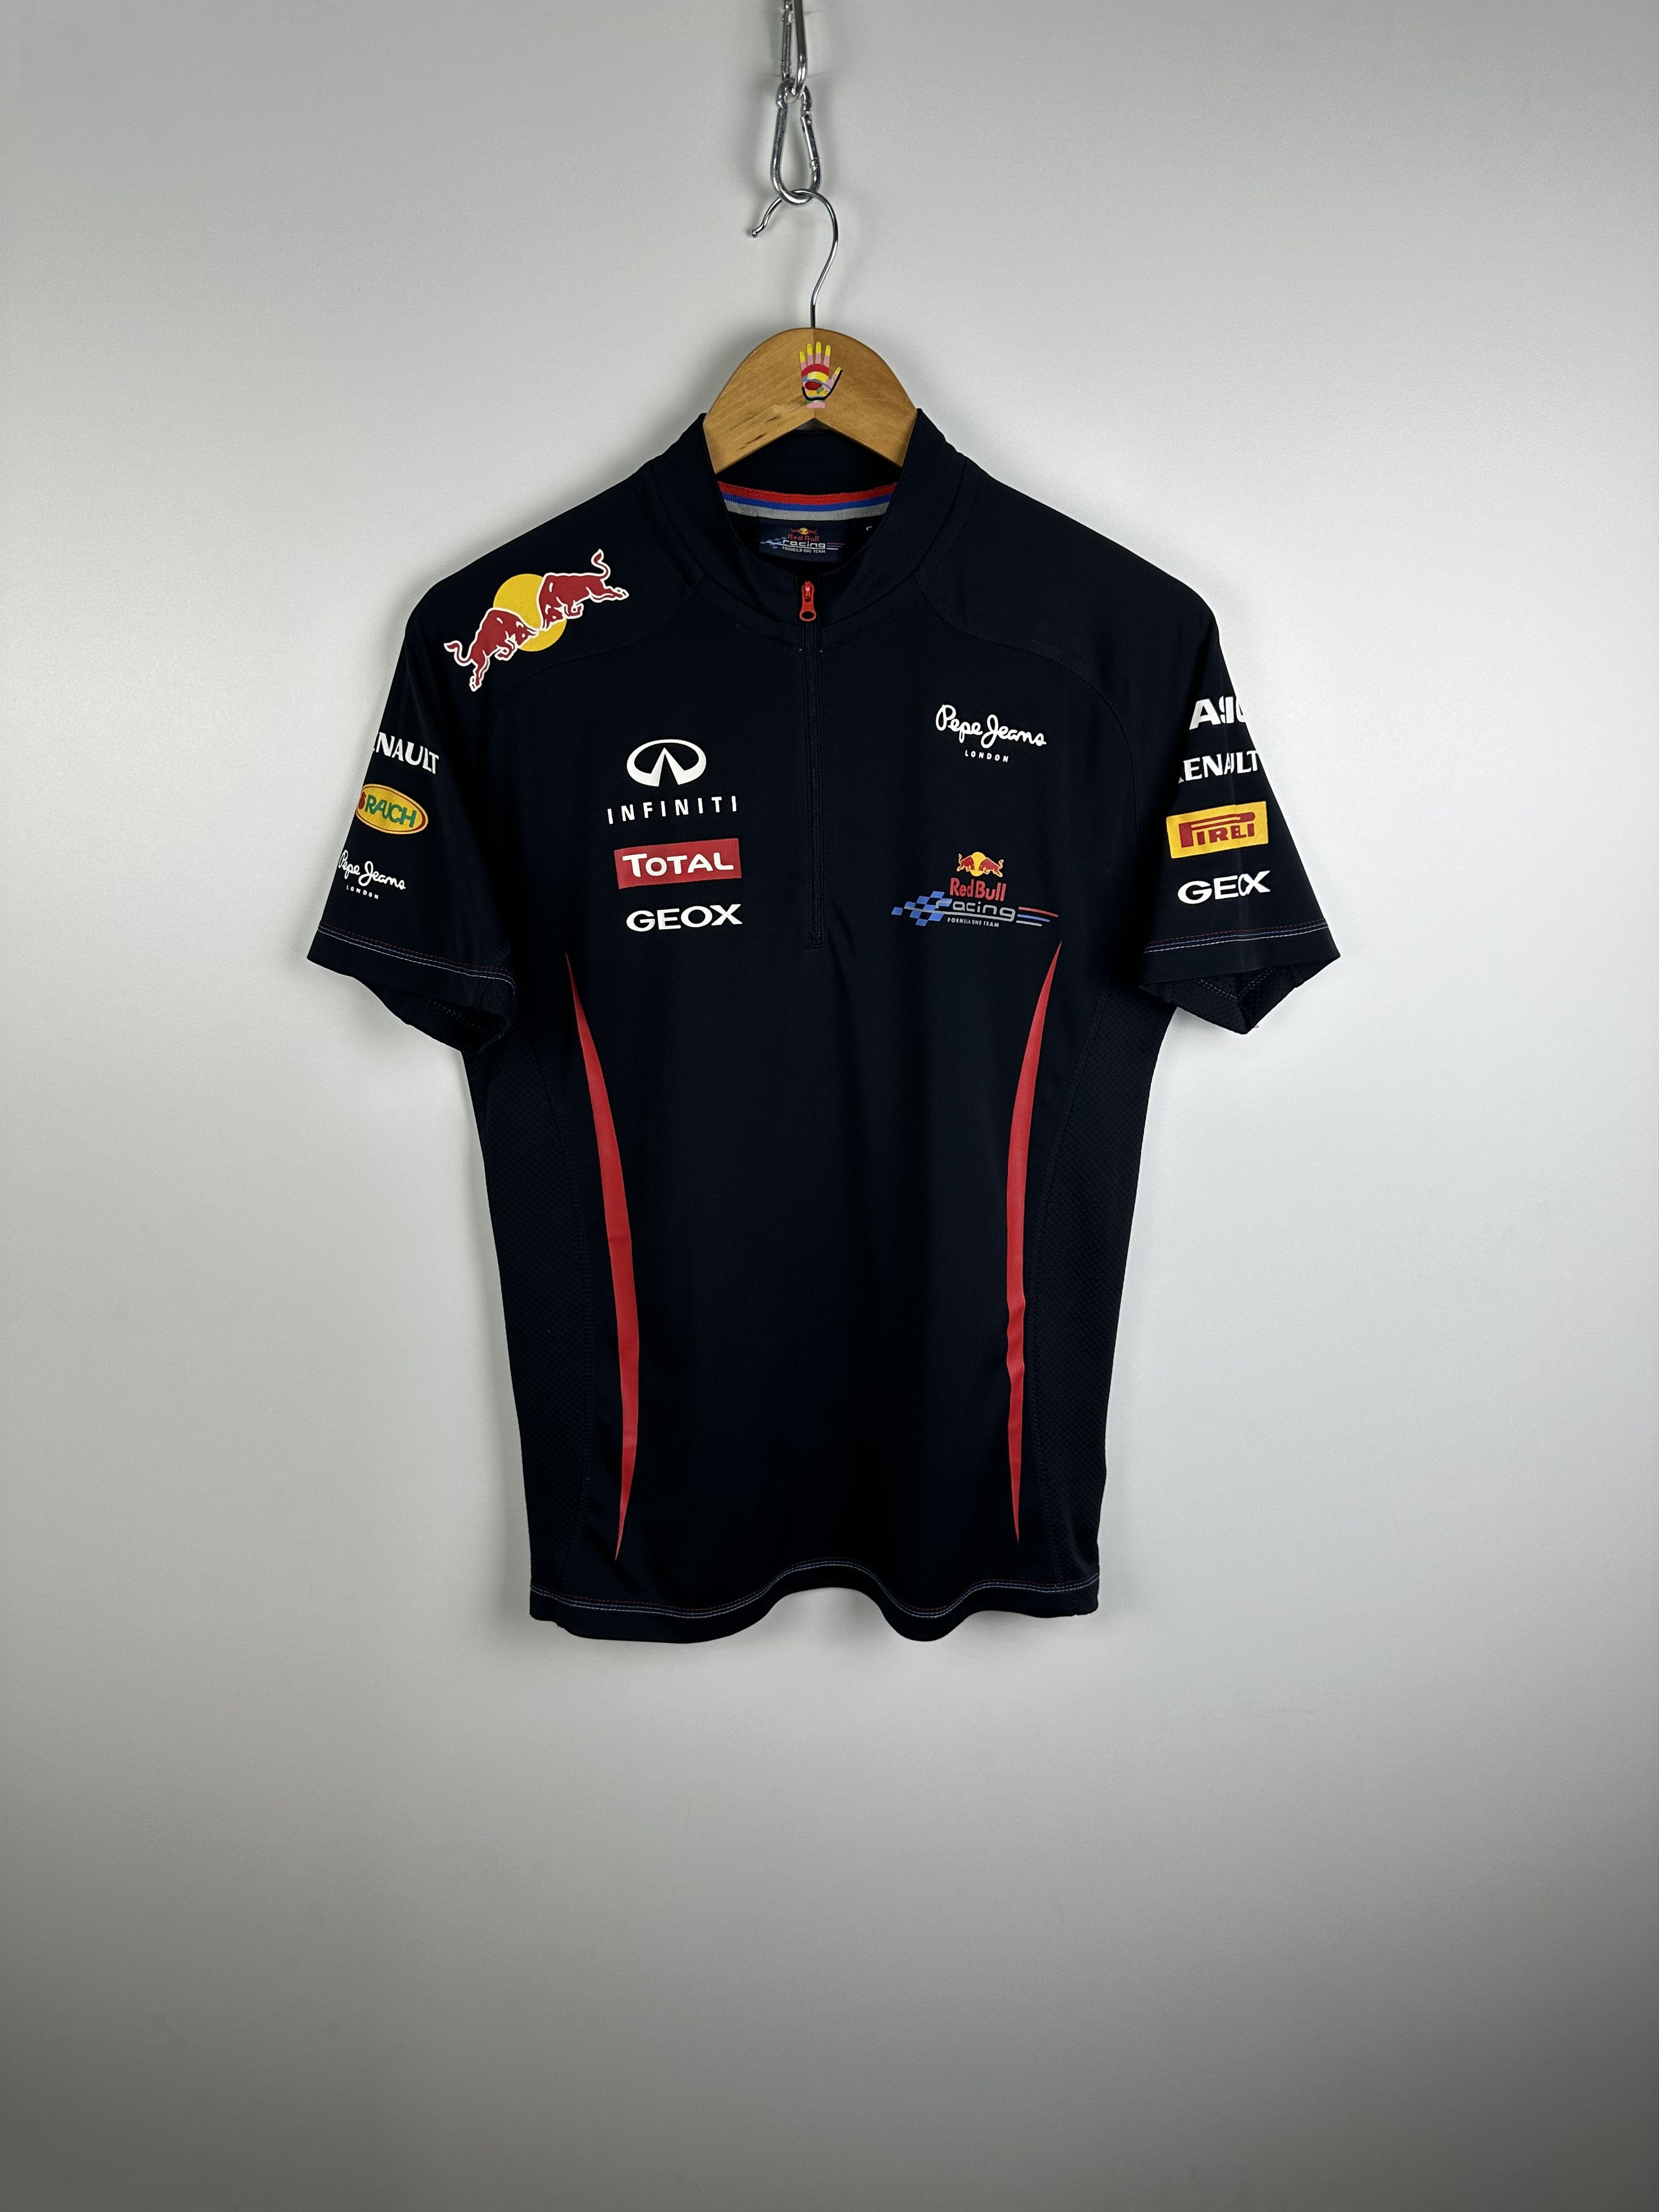 Pepe Jeans Pepe Jeans Red Bull Racing T Shirt Jersey Infiniti Formula 1 ...